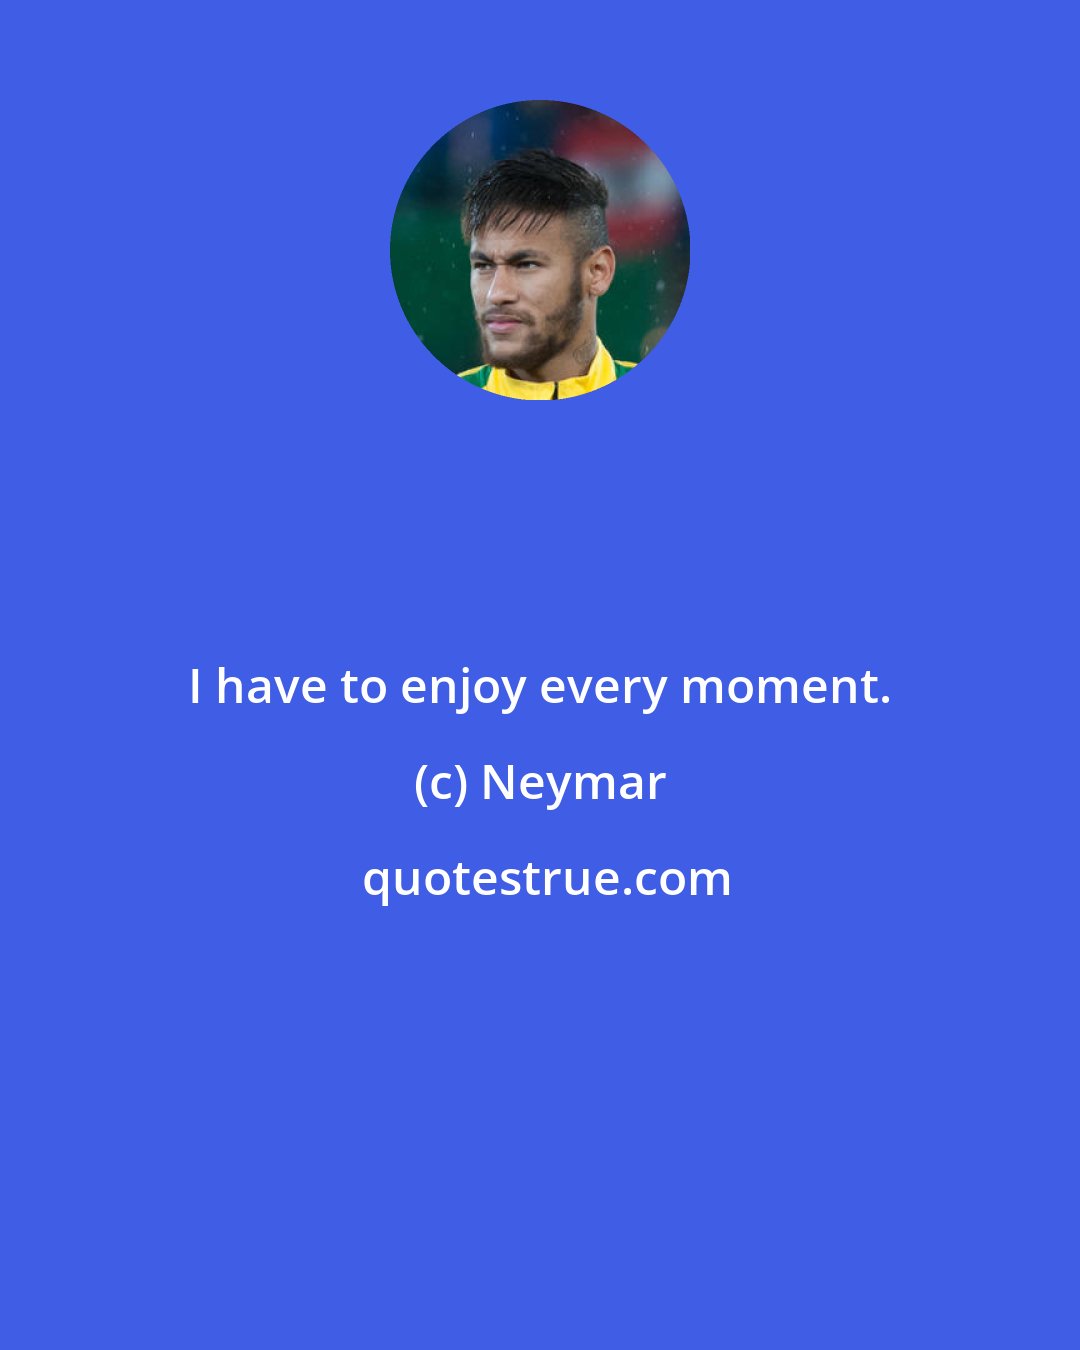 Neymar: I have to enjoy every moment.